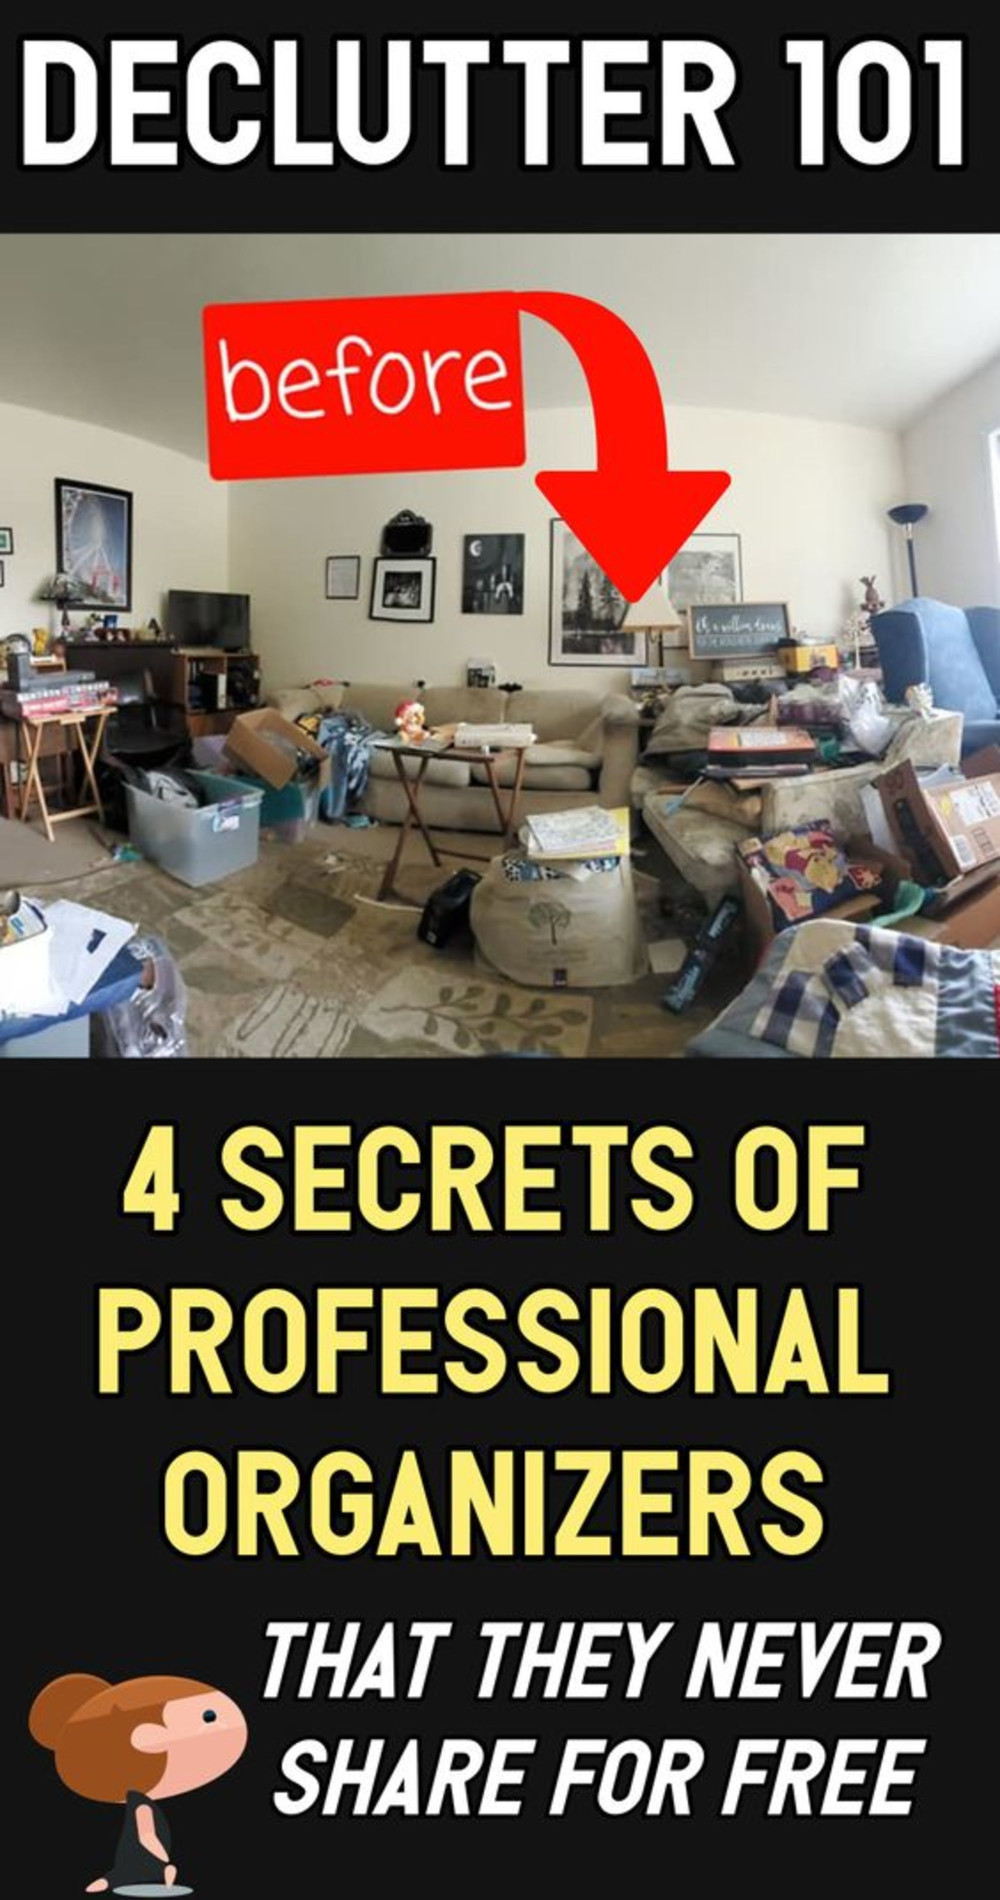 declutter 101 - 4 secrets of professional organizers